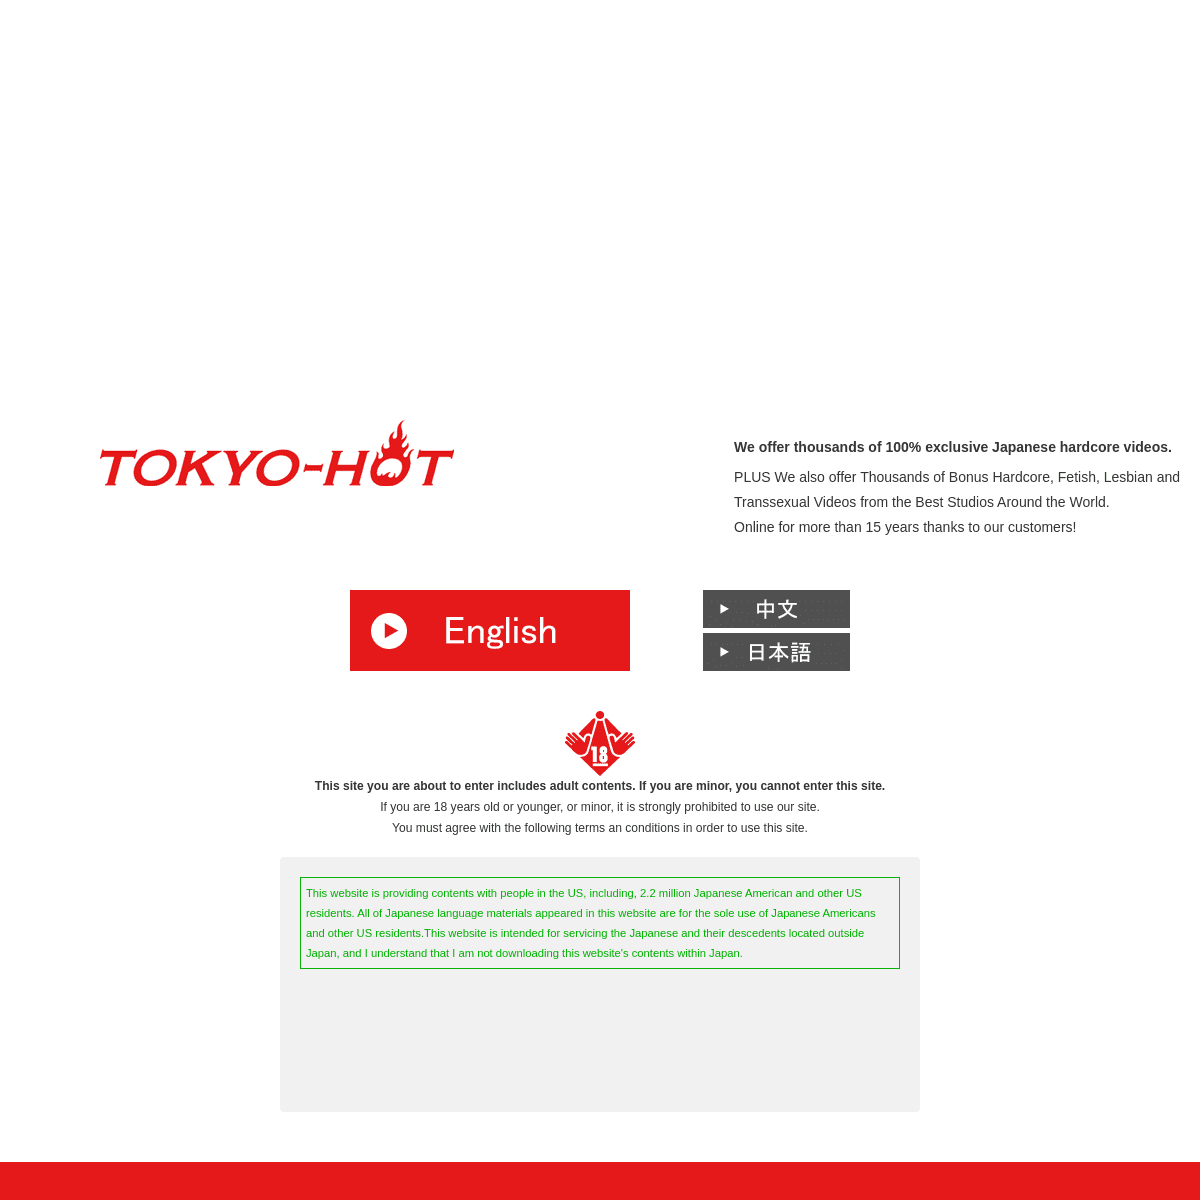 A complete backup of https://tokyo-hot.com